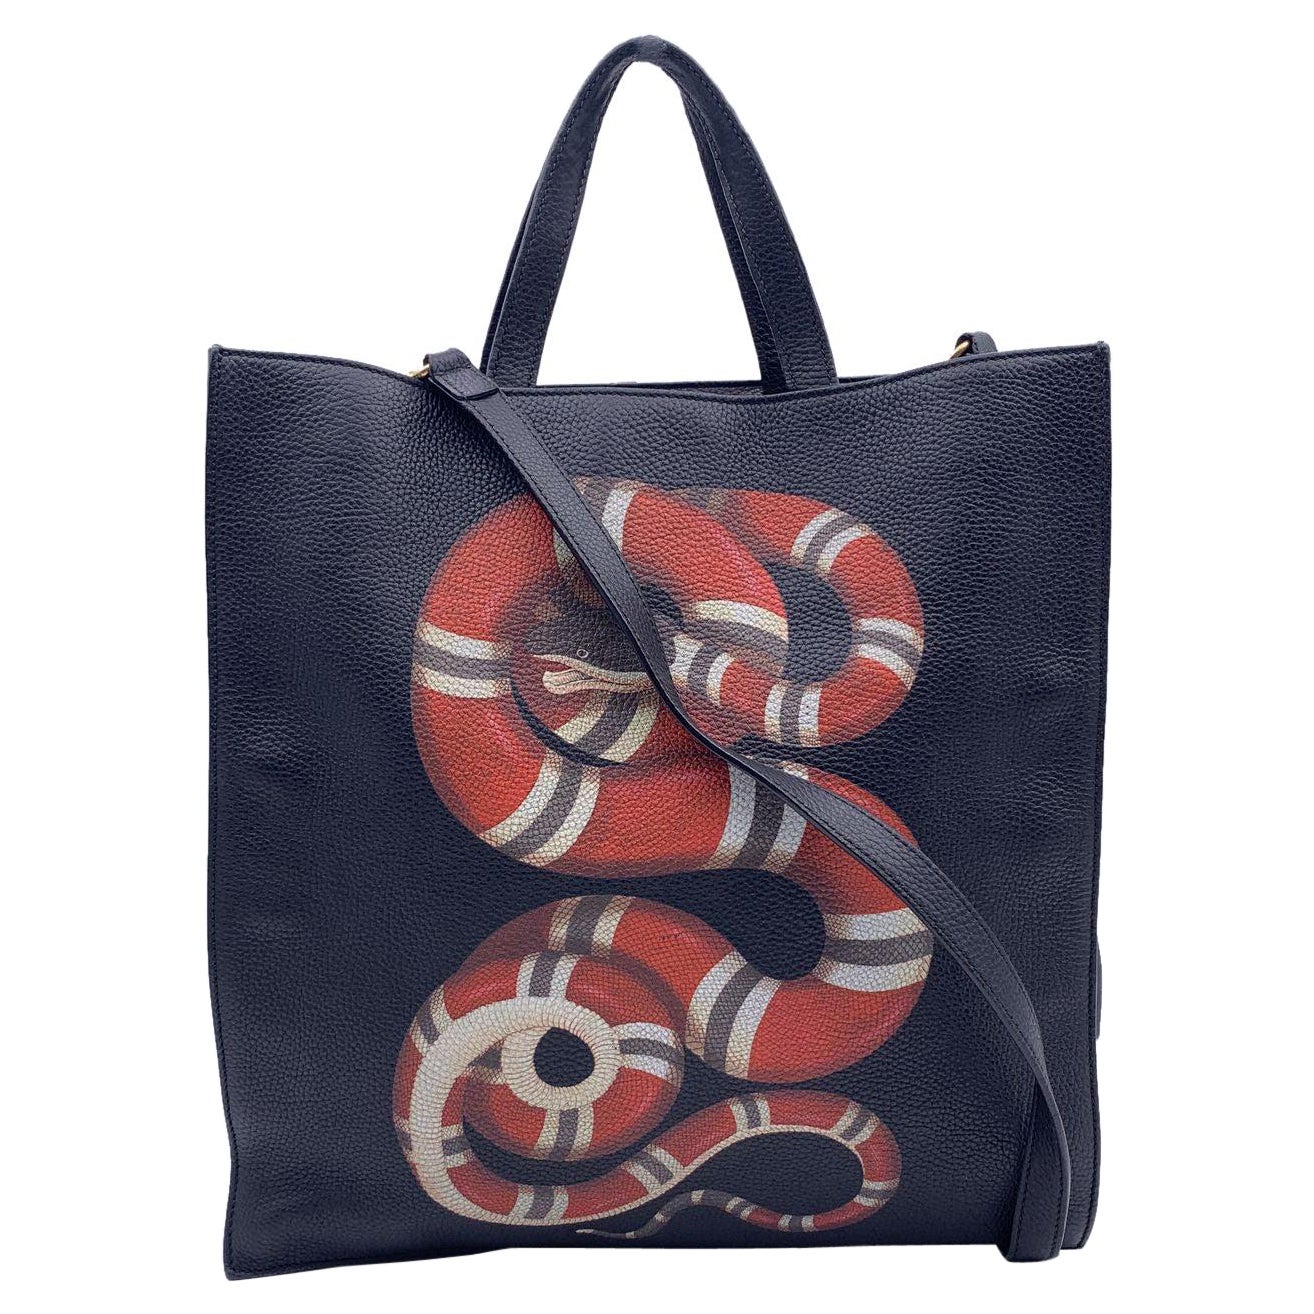 Gucci Black Leather Kingsnake Snake Print Tote Bag with Strap